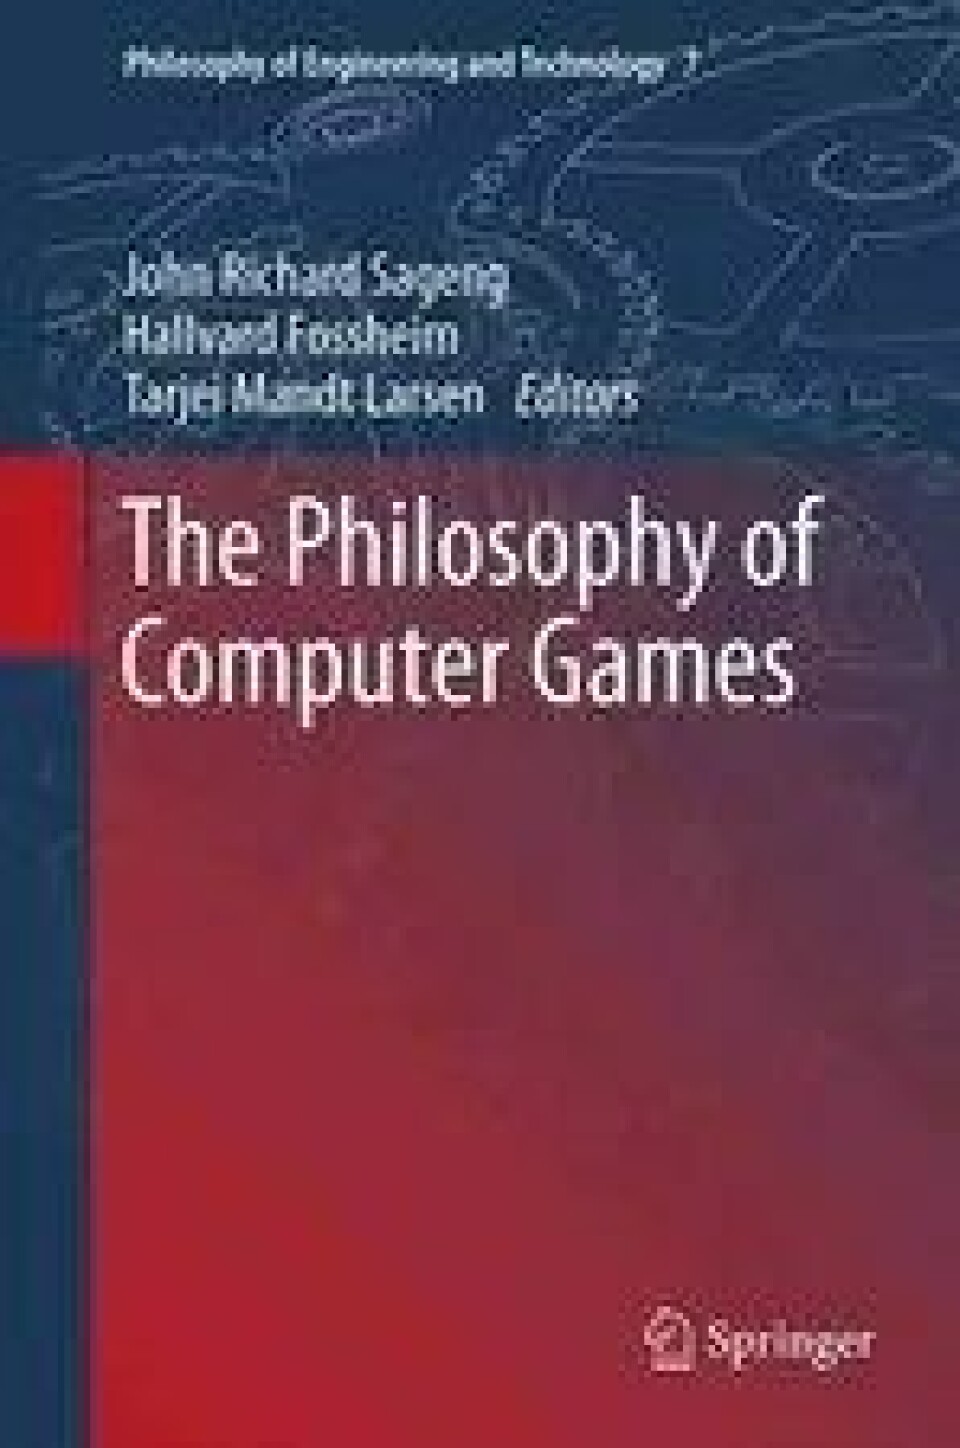 Bok: The Philosophy of Computer Games – John Richard Sageng, Hallvard Fossheim og Tarjei Mandt Larsen (Red.)